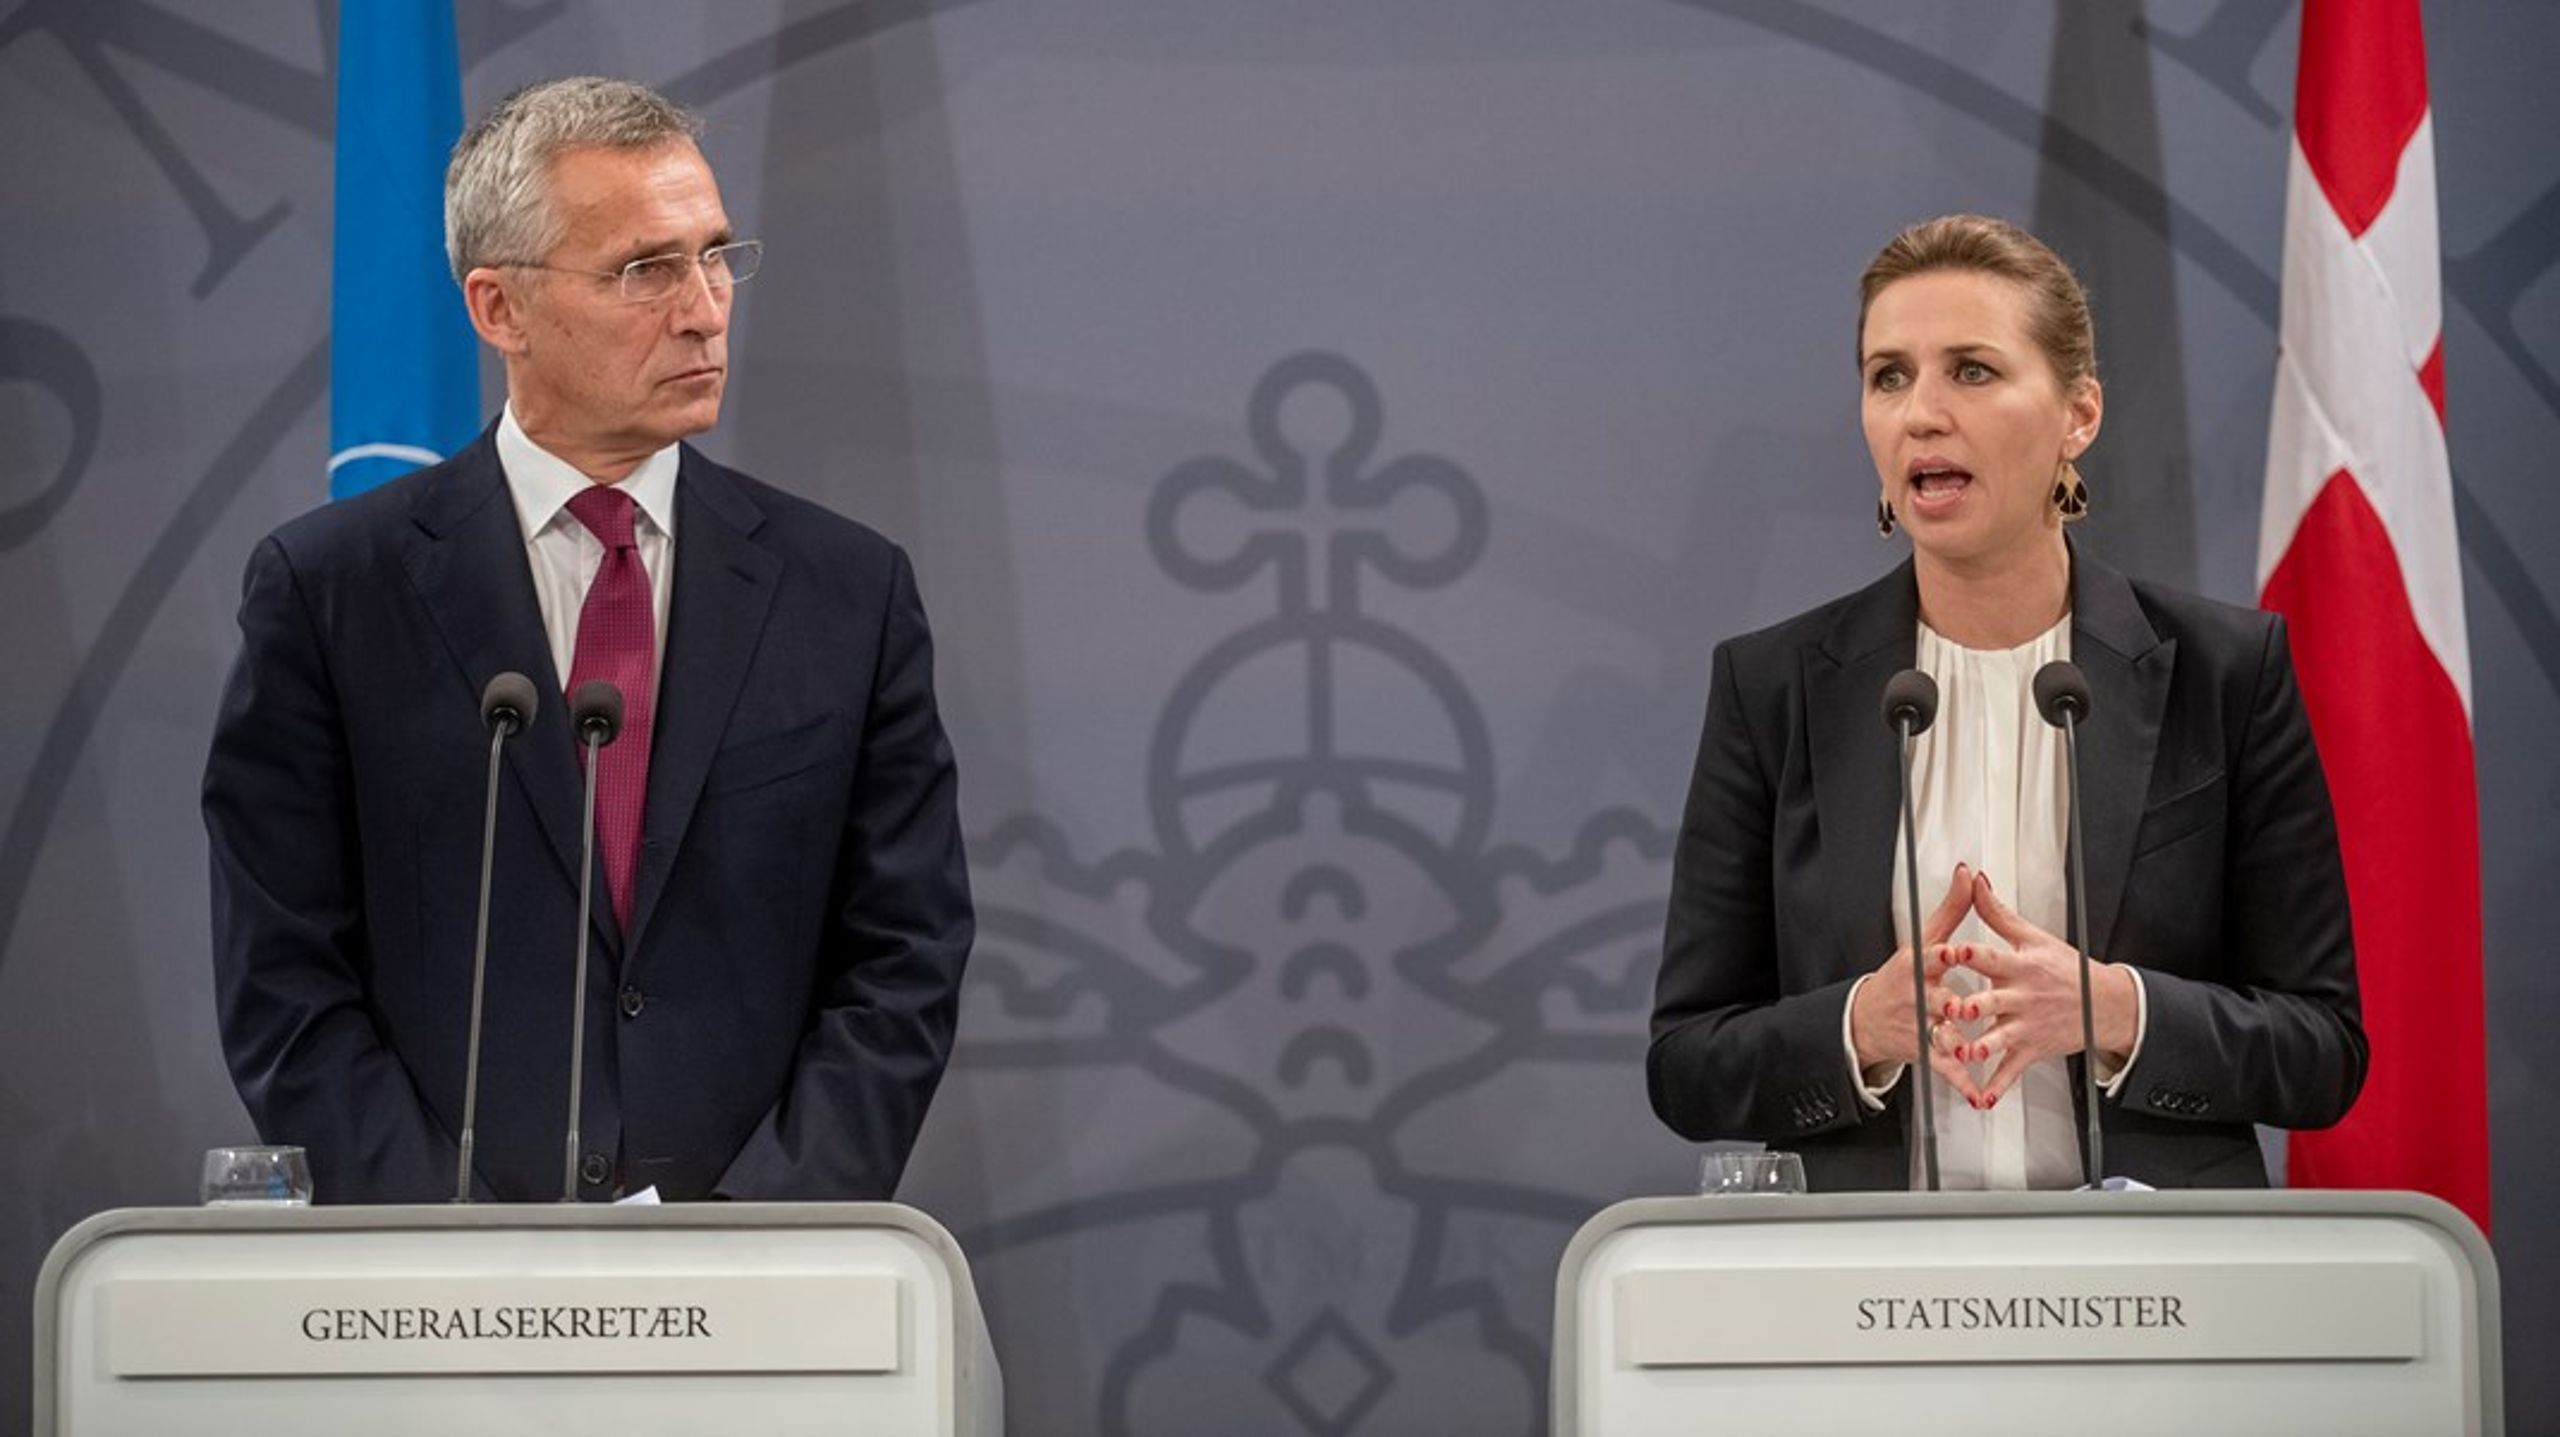 NATO's generalsekretær Jens Stoltenberg (t.v.) og Danmarks statsminister Mette Frederiksen (t.h.) ved et pressemøde i Statsministeriet i november sidste år.